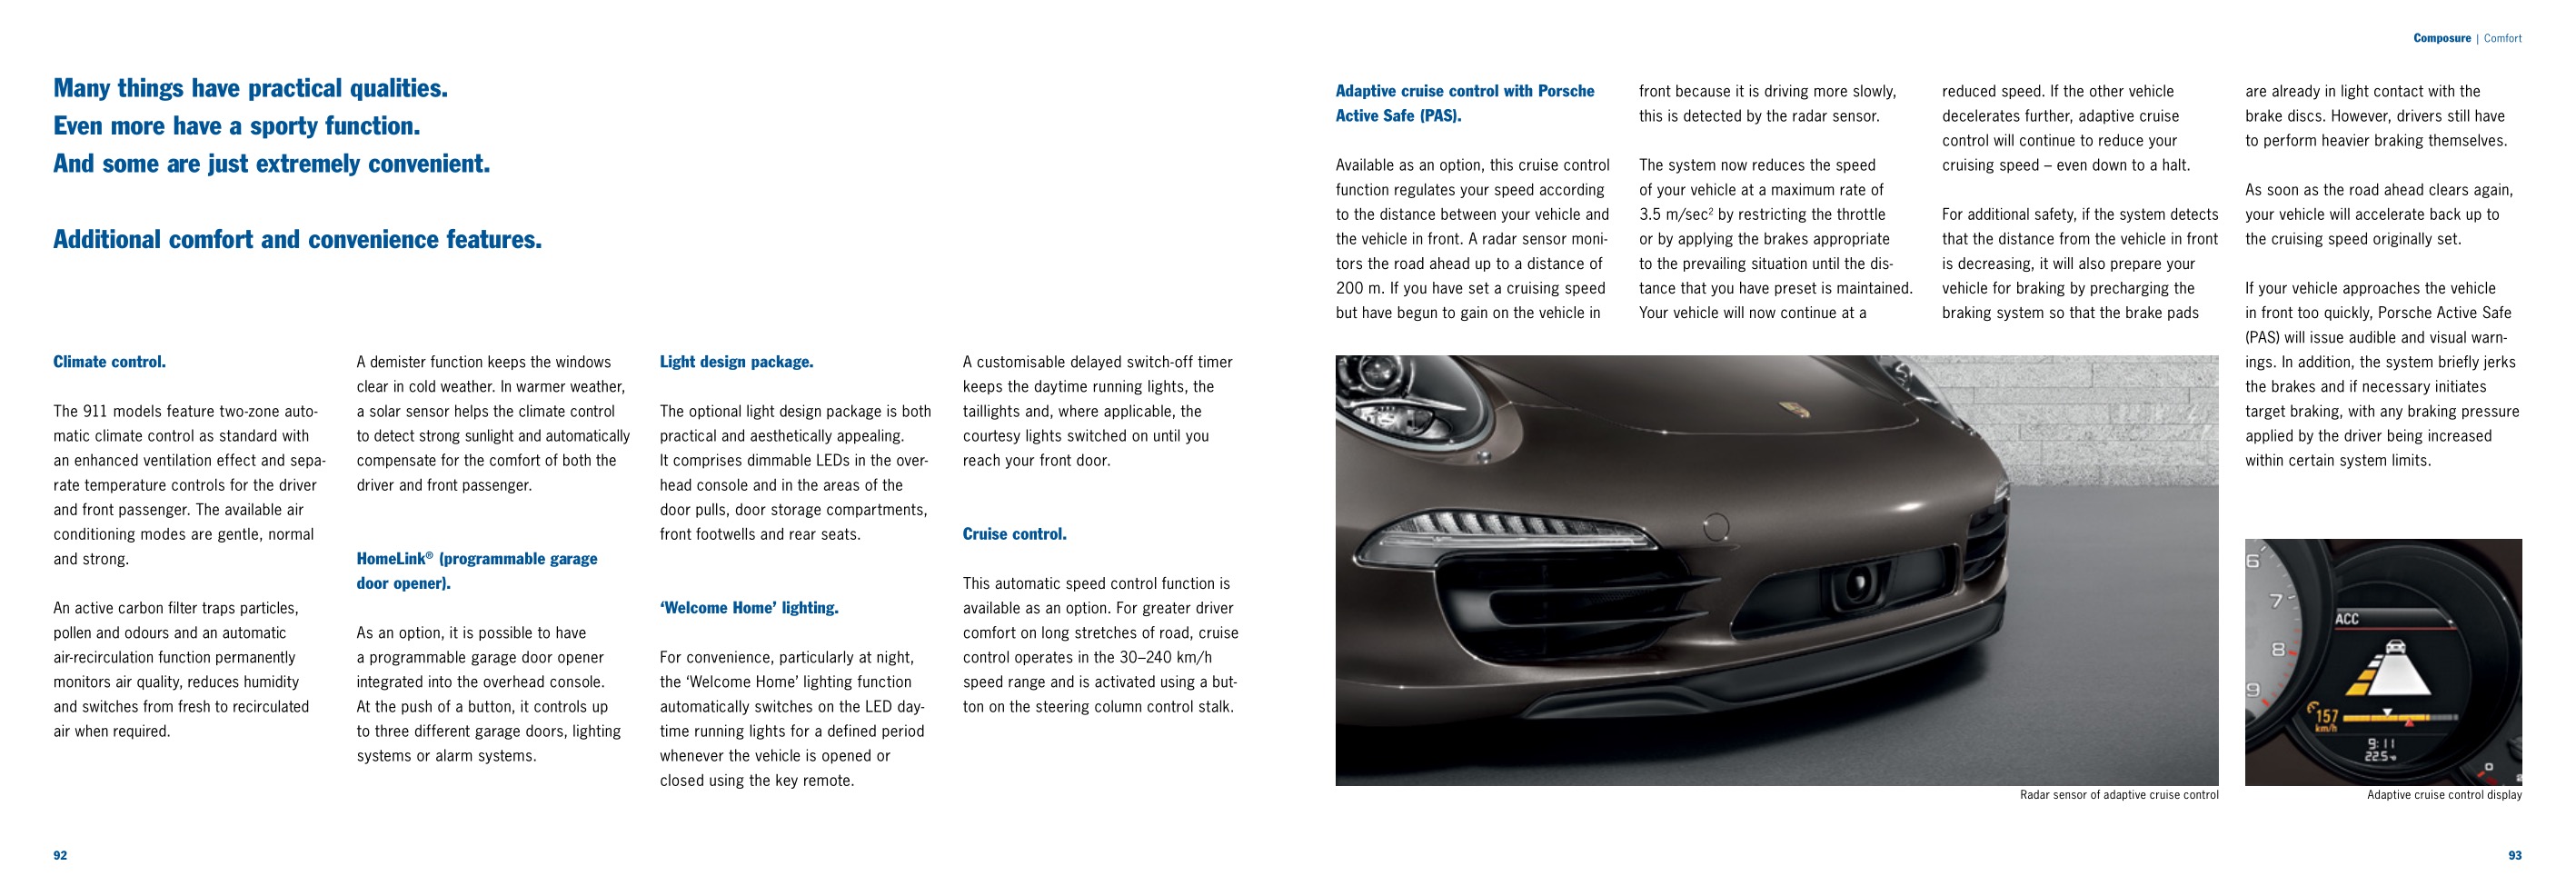 2014 Porsche 911 Brochure Page 33